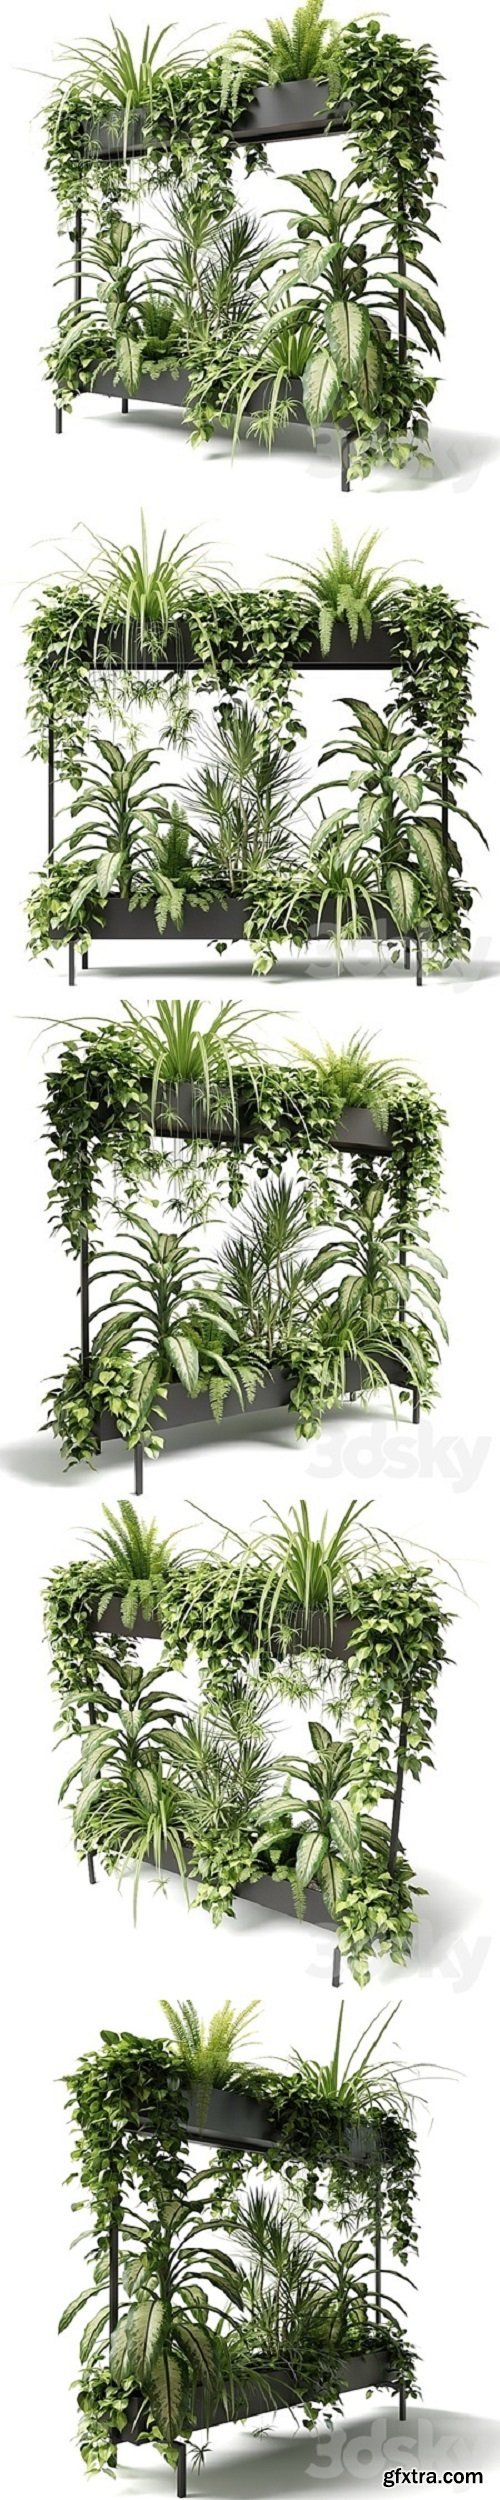 Pro 3DSky - Mynthe rectangular two-storey planter